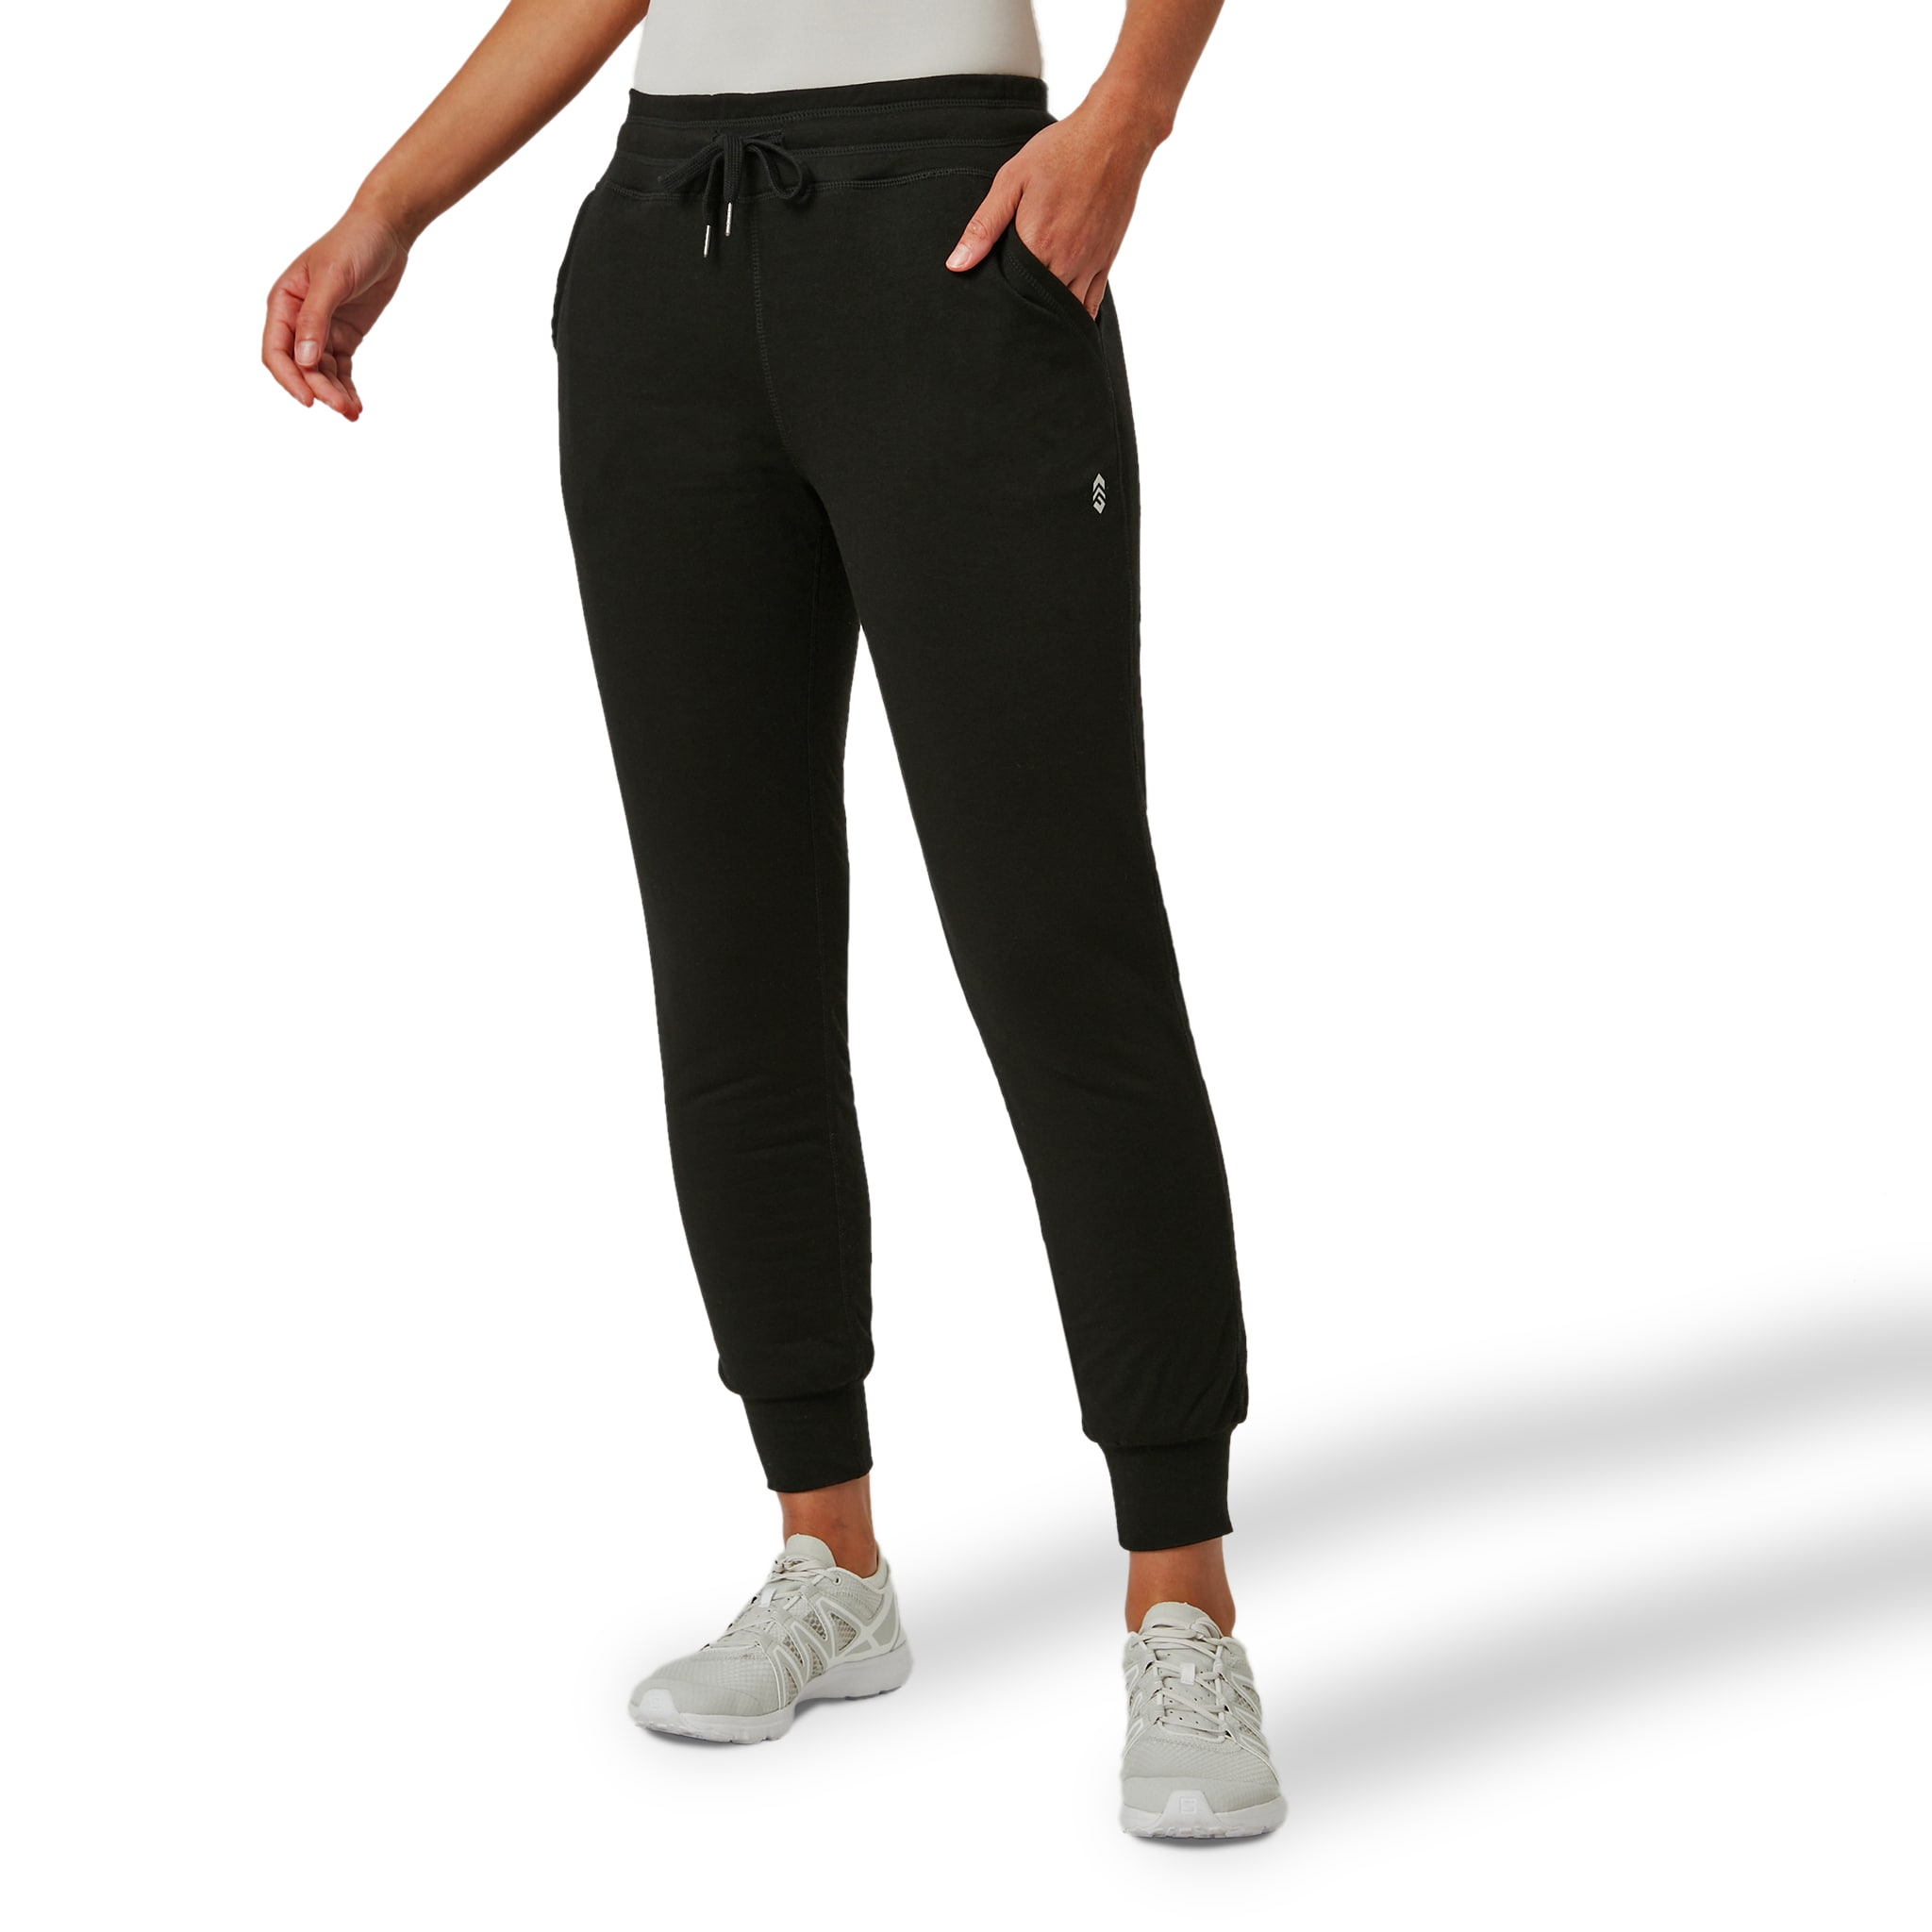 Women's Black Jogger Pants, Size L